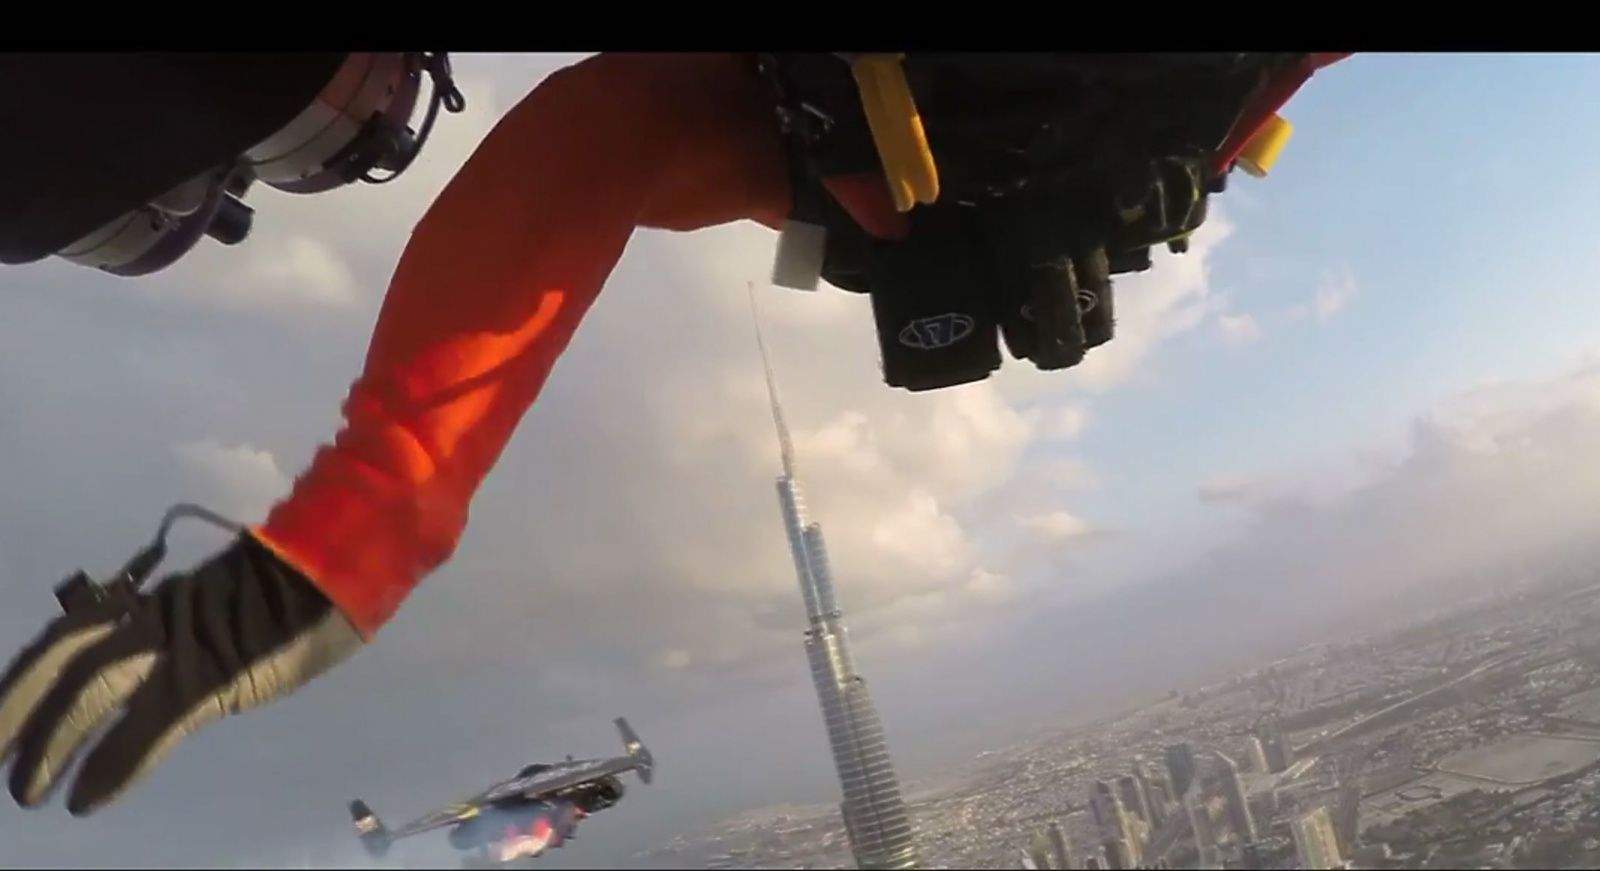 Jetman Yves Rossy and his new stuntman sidekick Vince Reffet fly in formation over Dubai. Photo: XDubai/YouTube